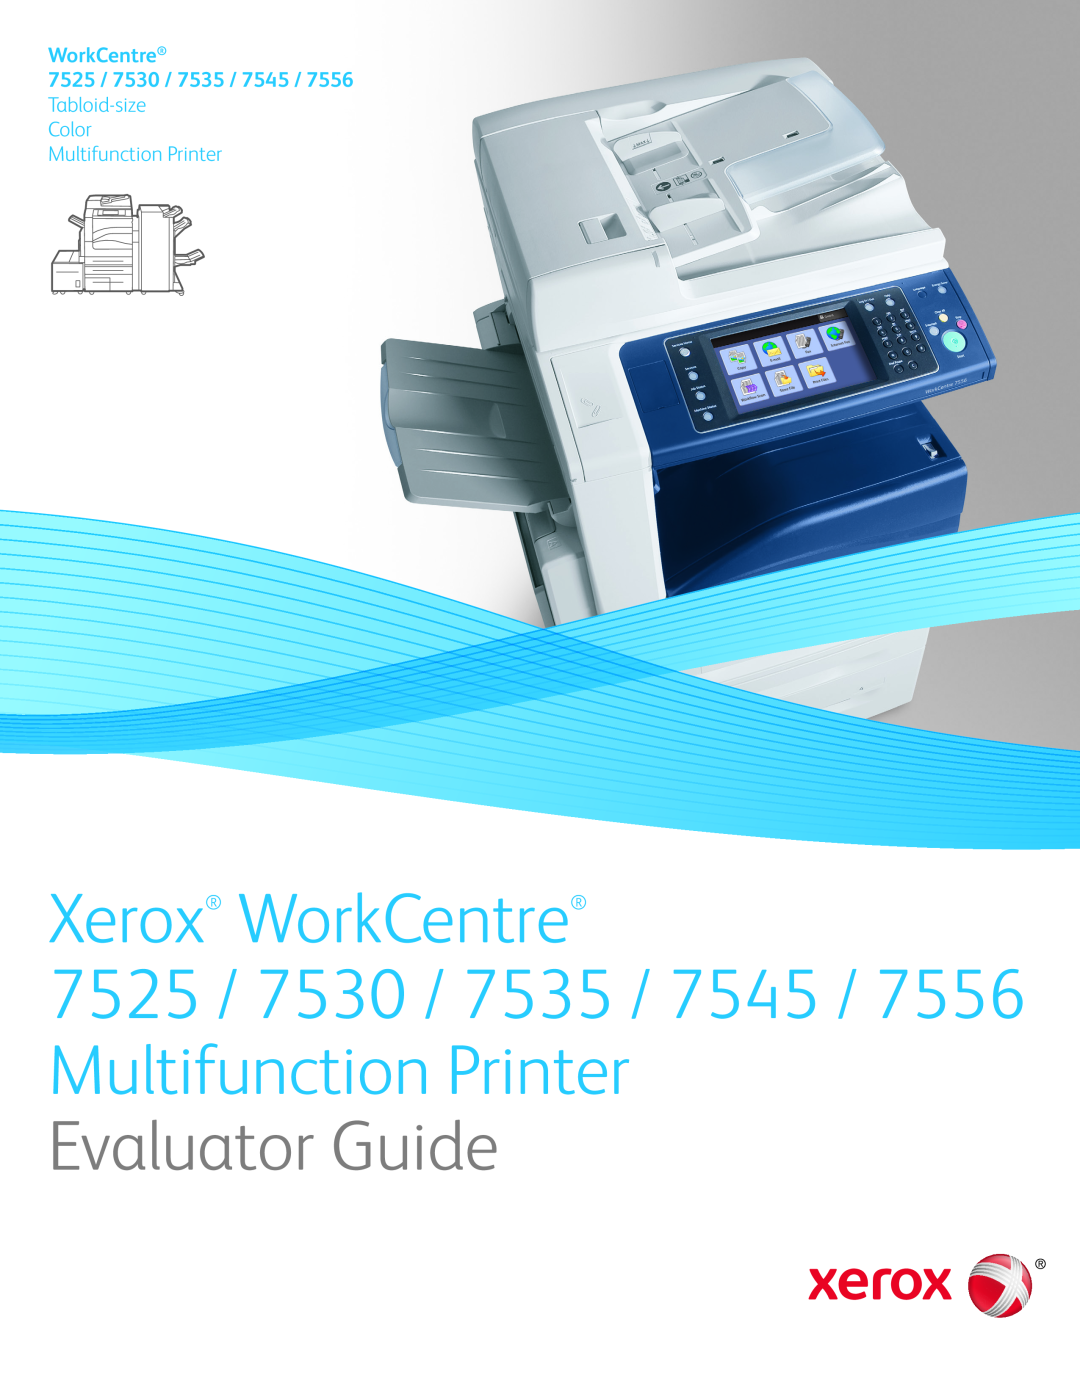 Xerox 7556 manual Xerox WorkCentre 7525 / 7530 / 7535 / 7545 Multifunction Printer, Evaluator Guide 